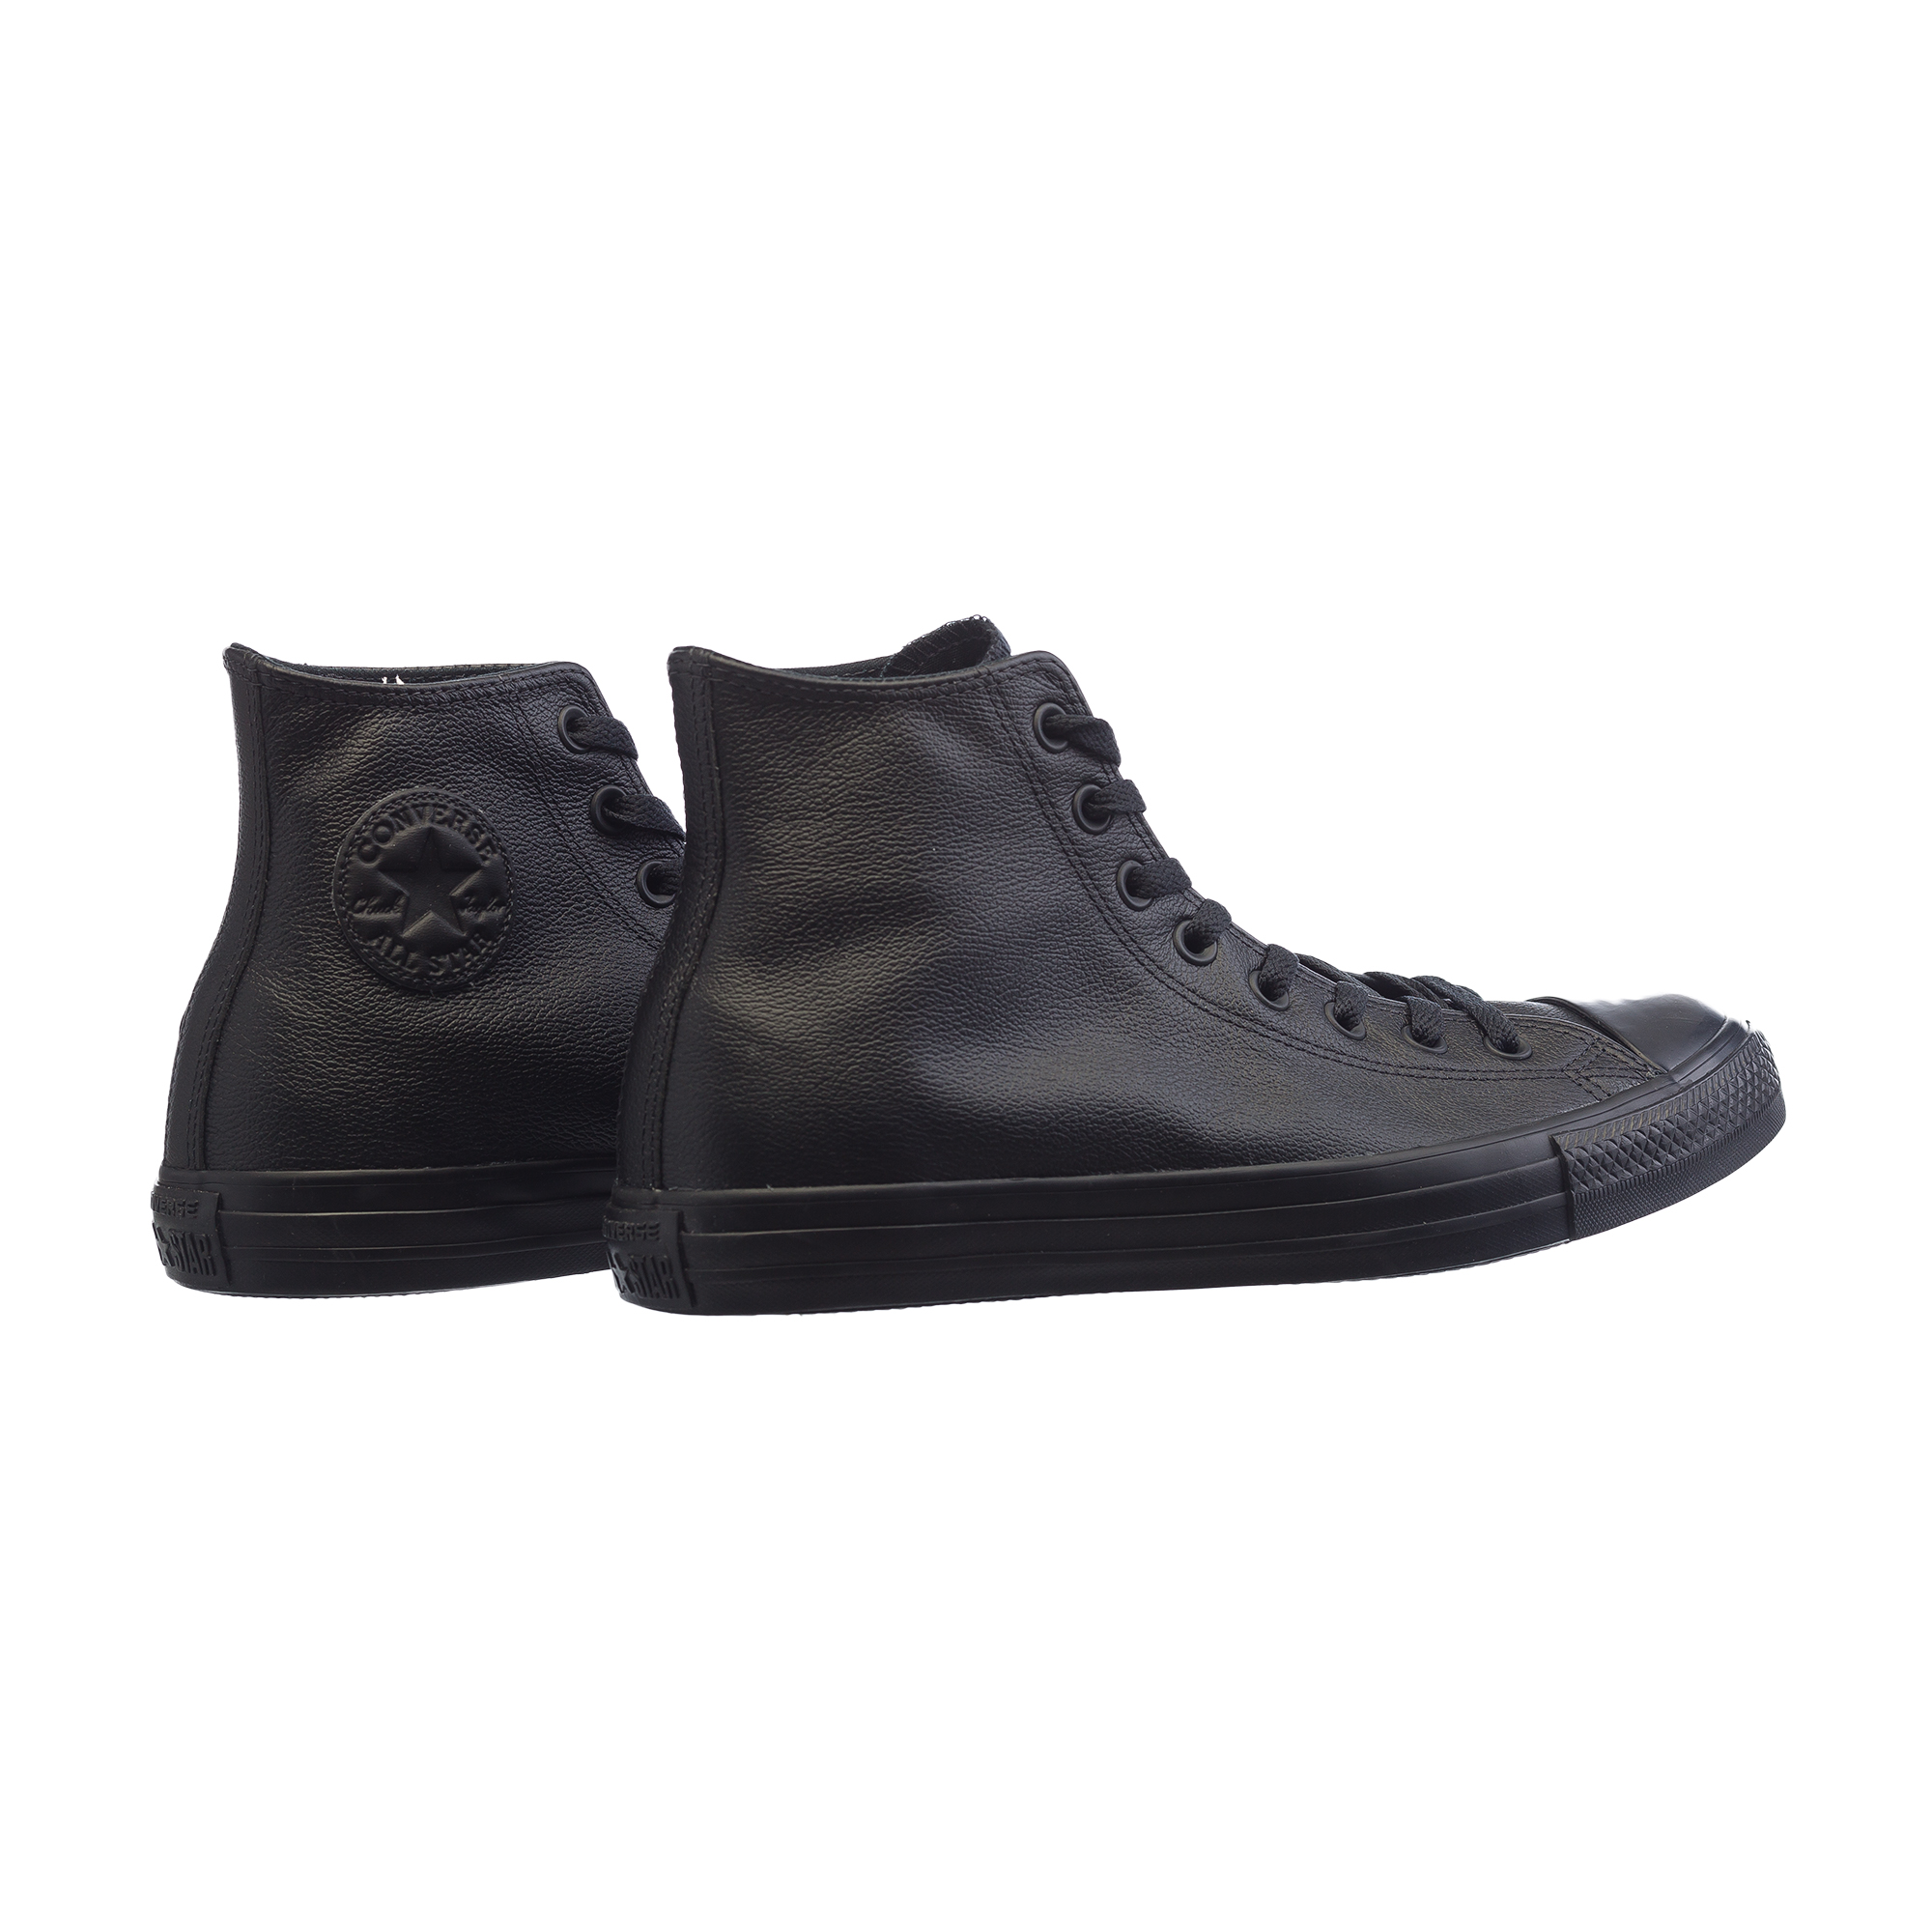 Chuck Taylor All Star Leather CONVERSE, размер 39, цвет черный CV135251 - фото 3